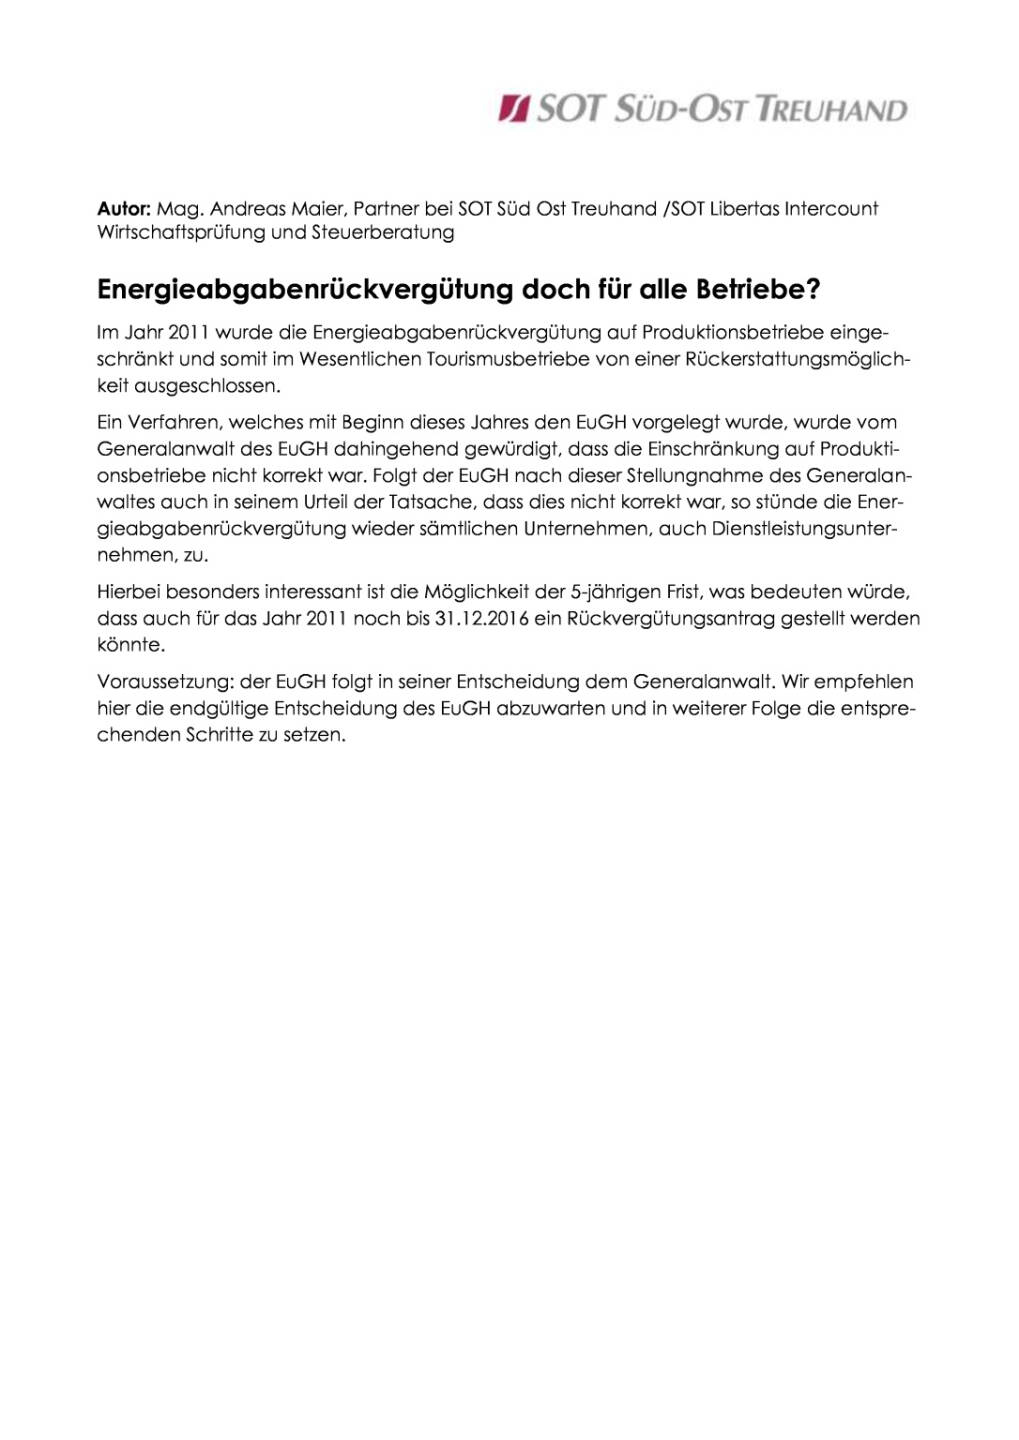 SOT Süd-Ost Treuhand: Energieabgabenrückvergütung, Seite 1/1, komplettes Dokument unter http://boerse-social.com/static/uploads/file_1470_sot_sud-ost_treuhand_energieabgabenruckvergutung.pdf